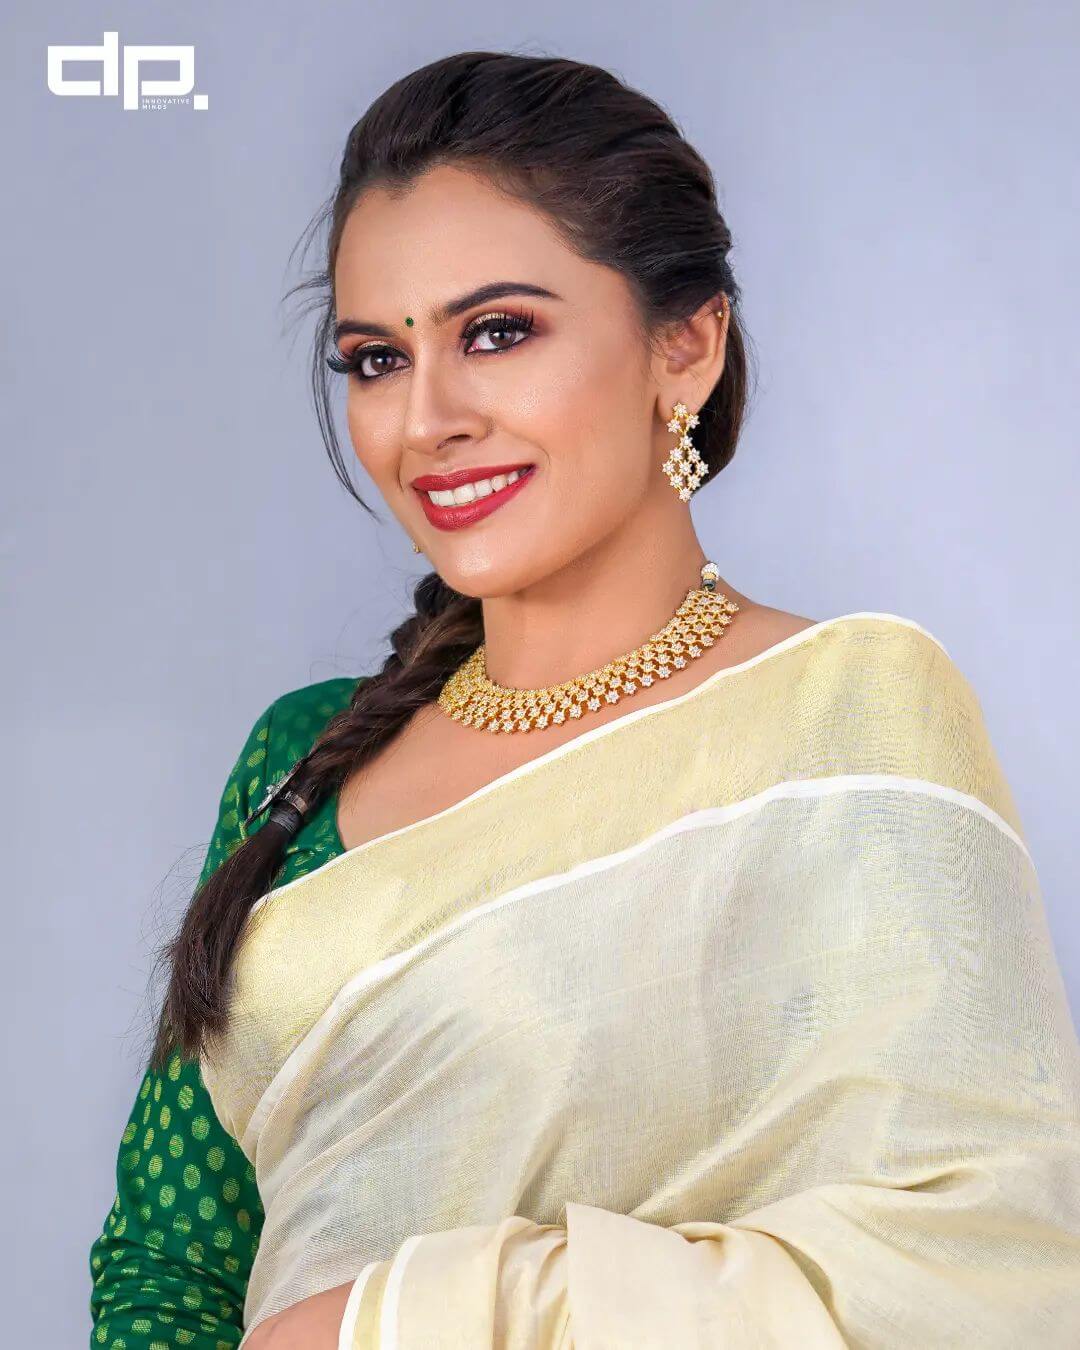 Dhanya Mary Varghese in traditional Kerala saree